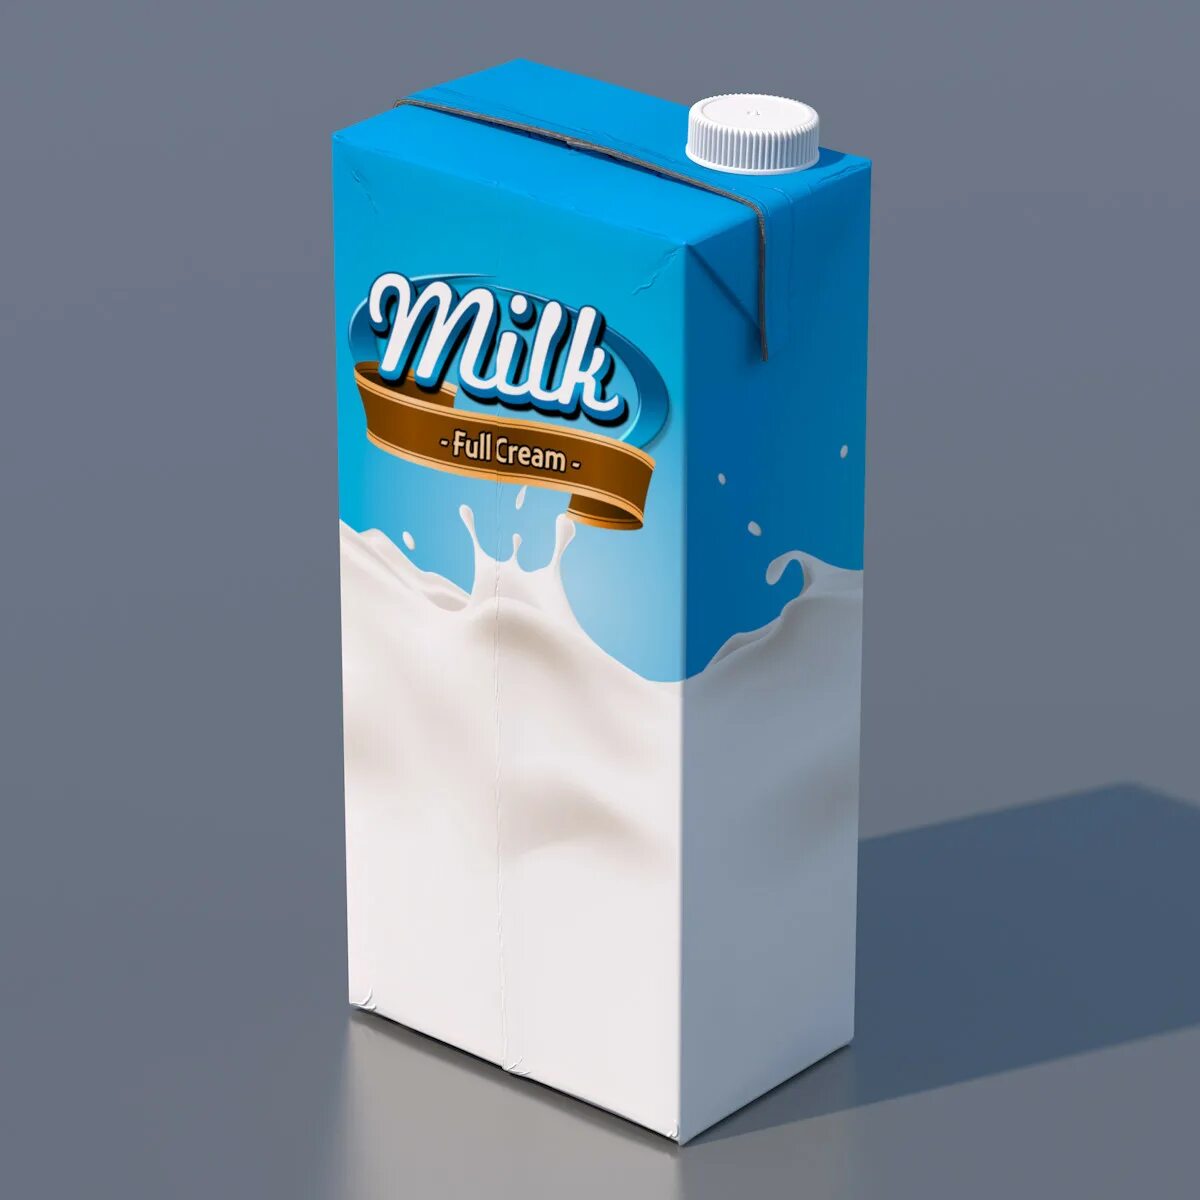 Пакеты тетра пак. Тетра пак Tetra Pack. Молоко Tetra Pak упаковка. Молоко в упаковке тетра пак. Упаковка тетра пак для молока.